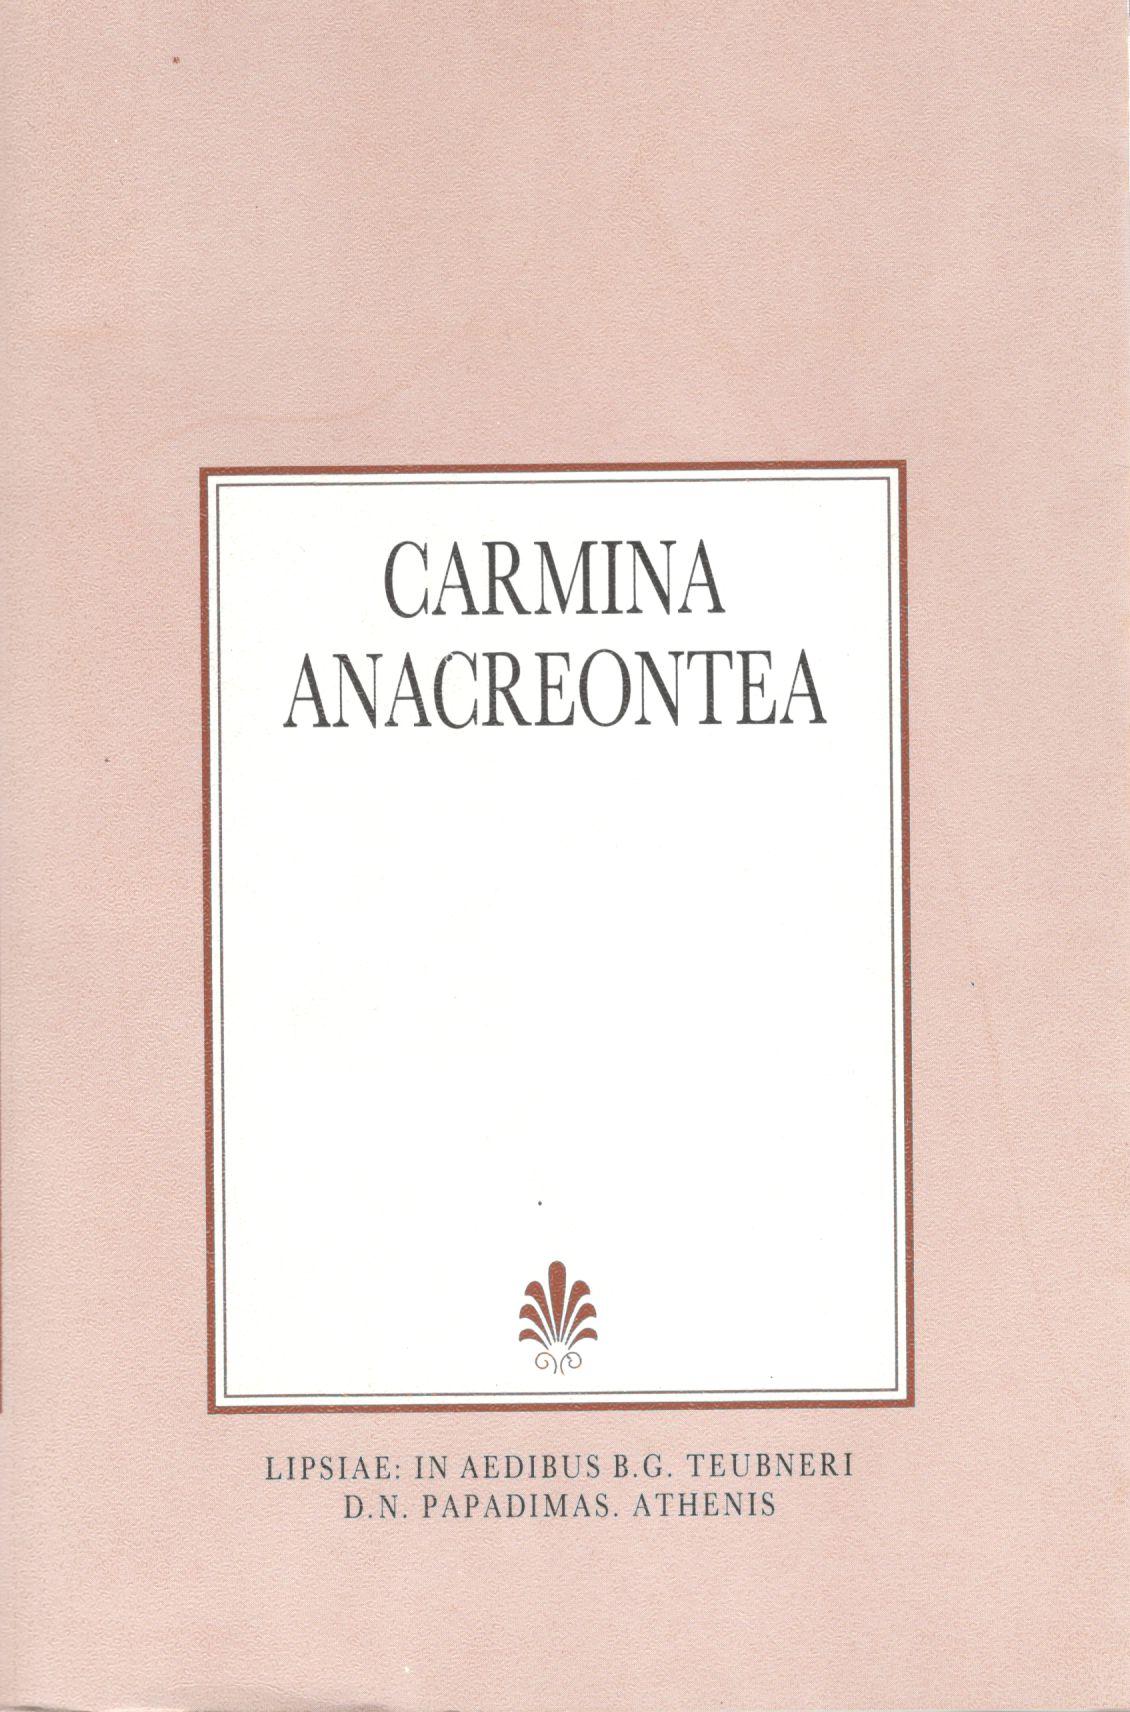 Anacreontis, Carmina [Ανακρέοντος, 'Ασματα]